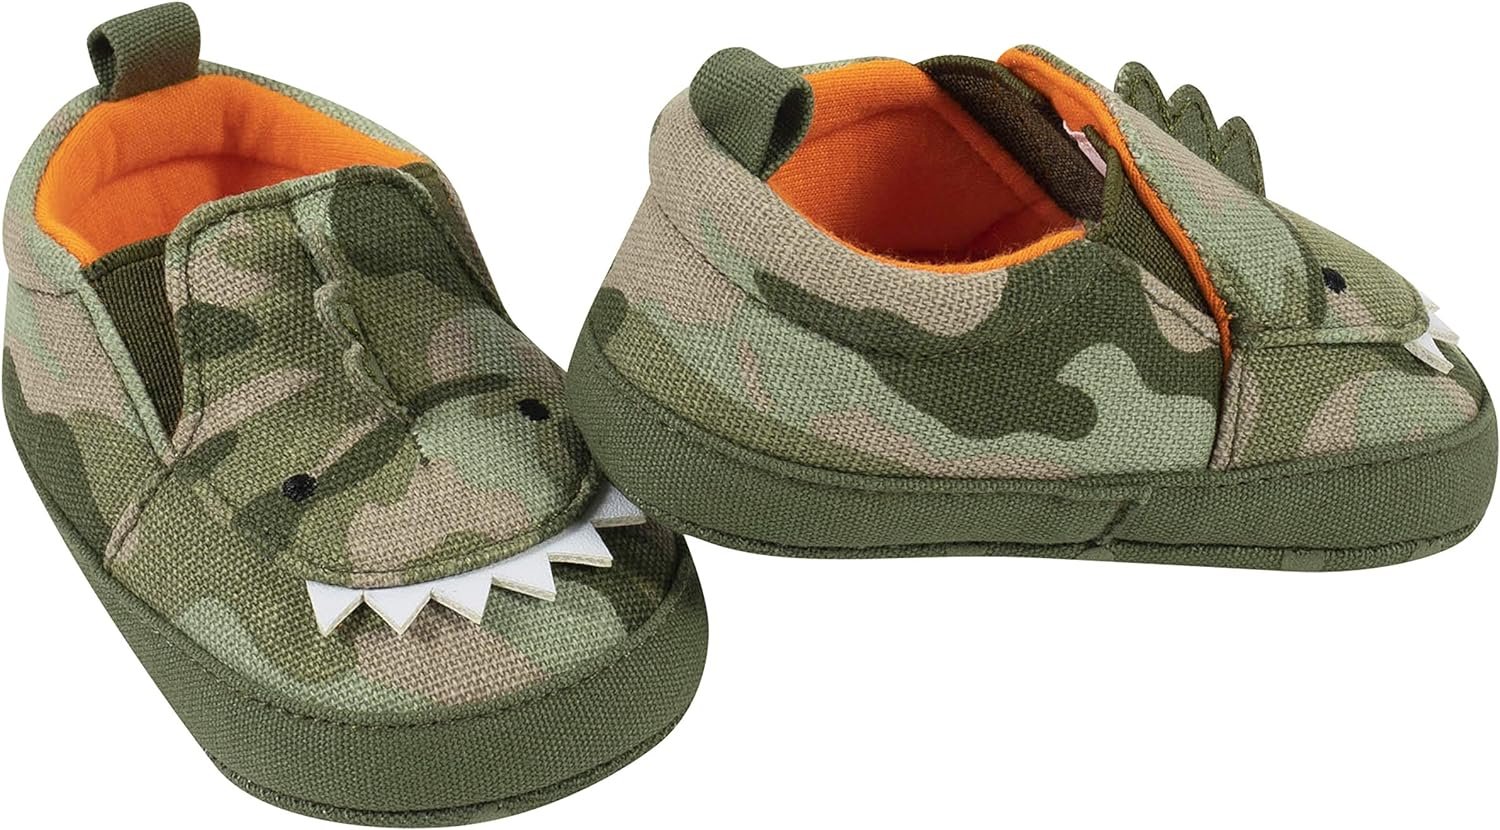 Gerber unisex-baby Sneakers Crib Shoes Newborn Infant Toddler Neutral Boy Girl